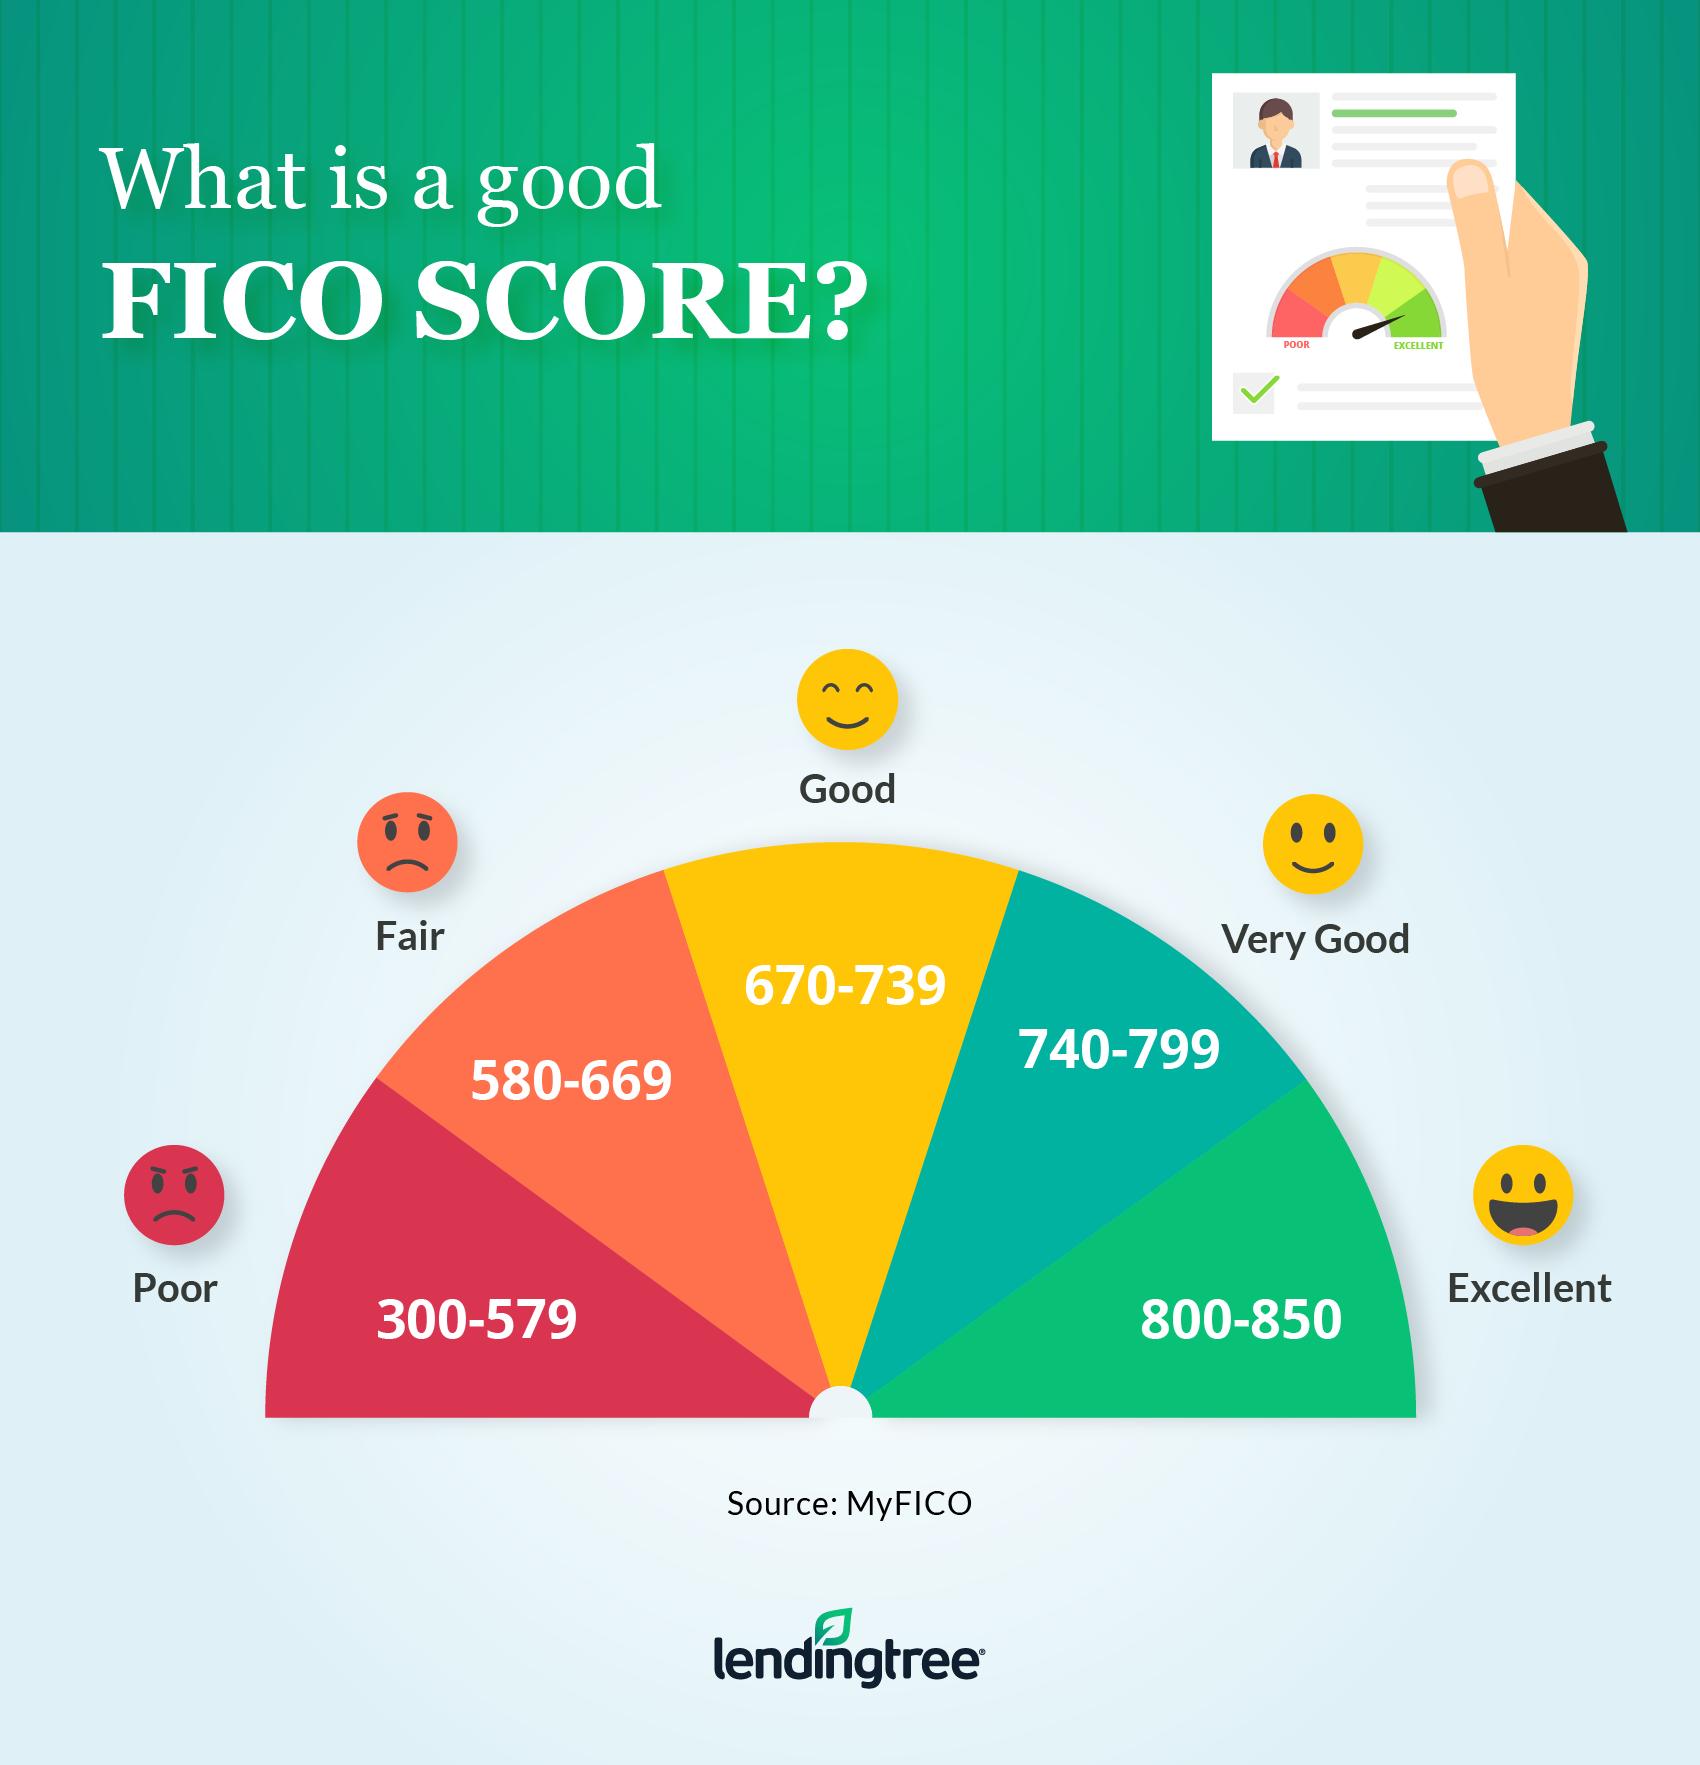 FICO Score ranges